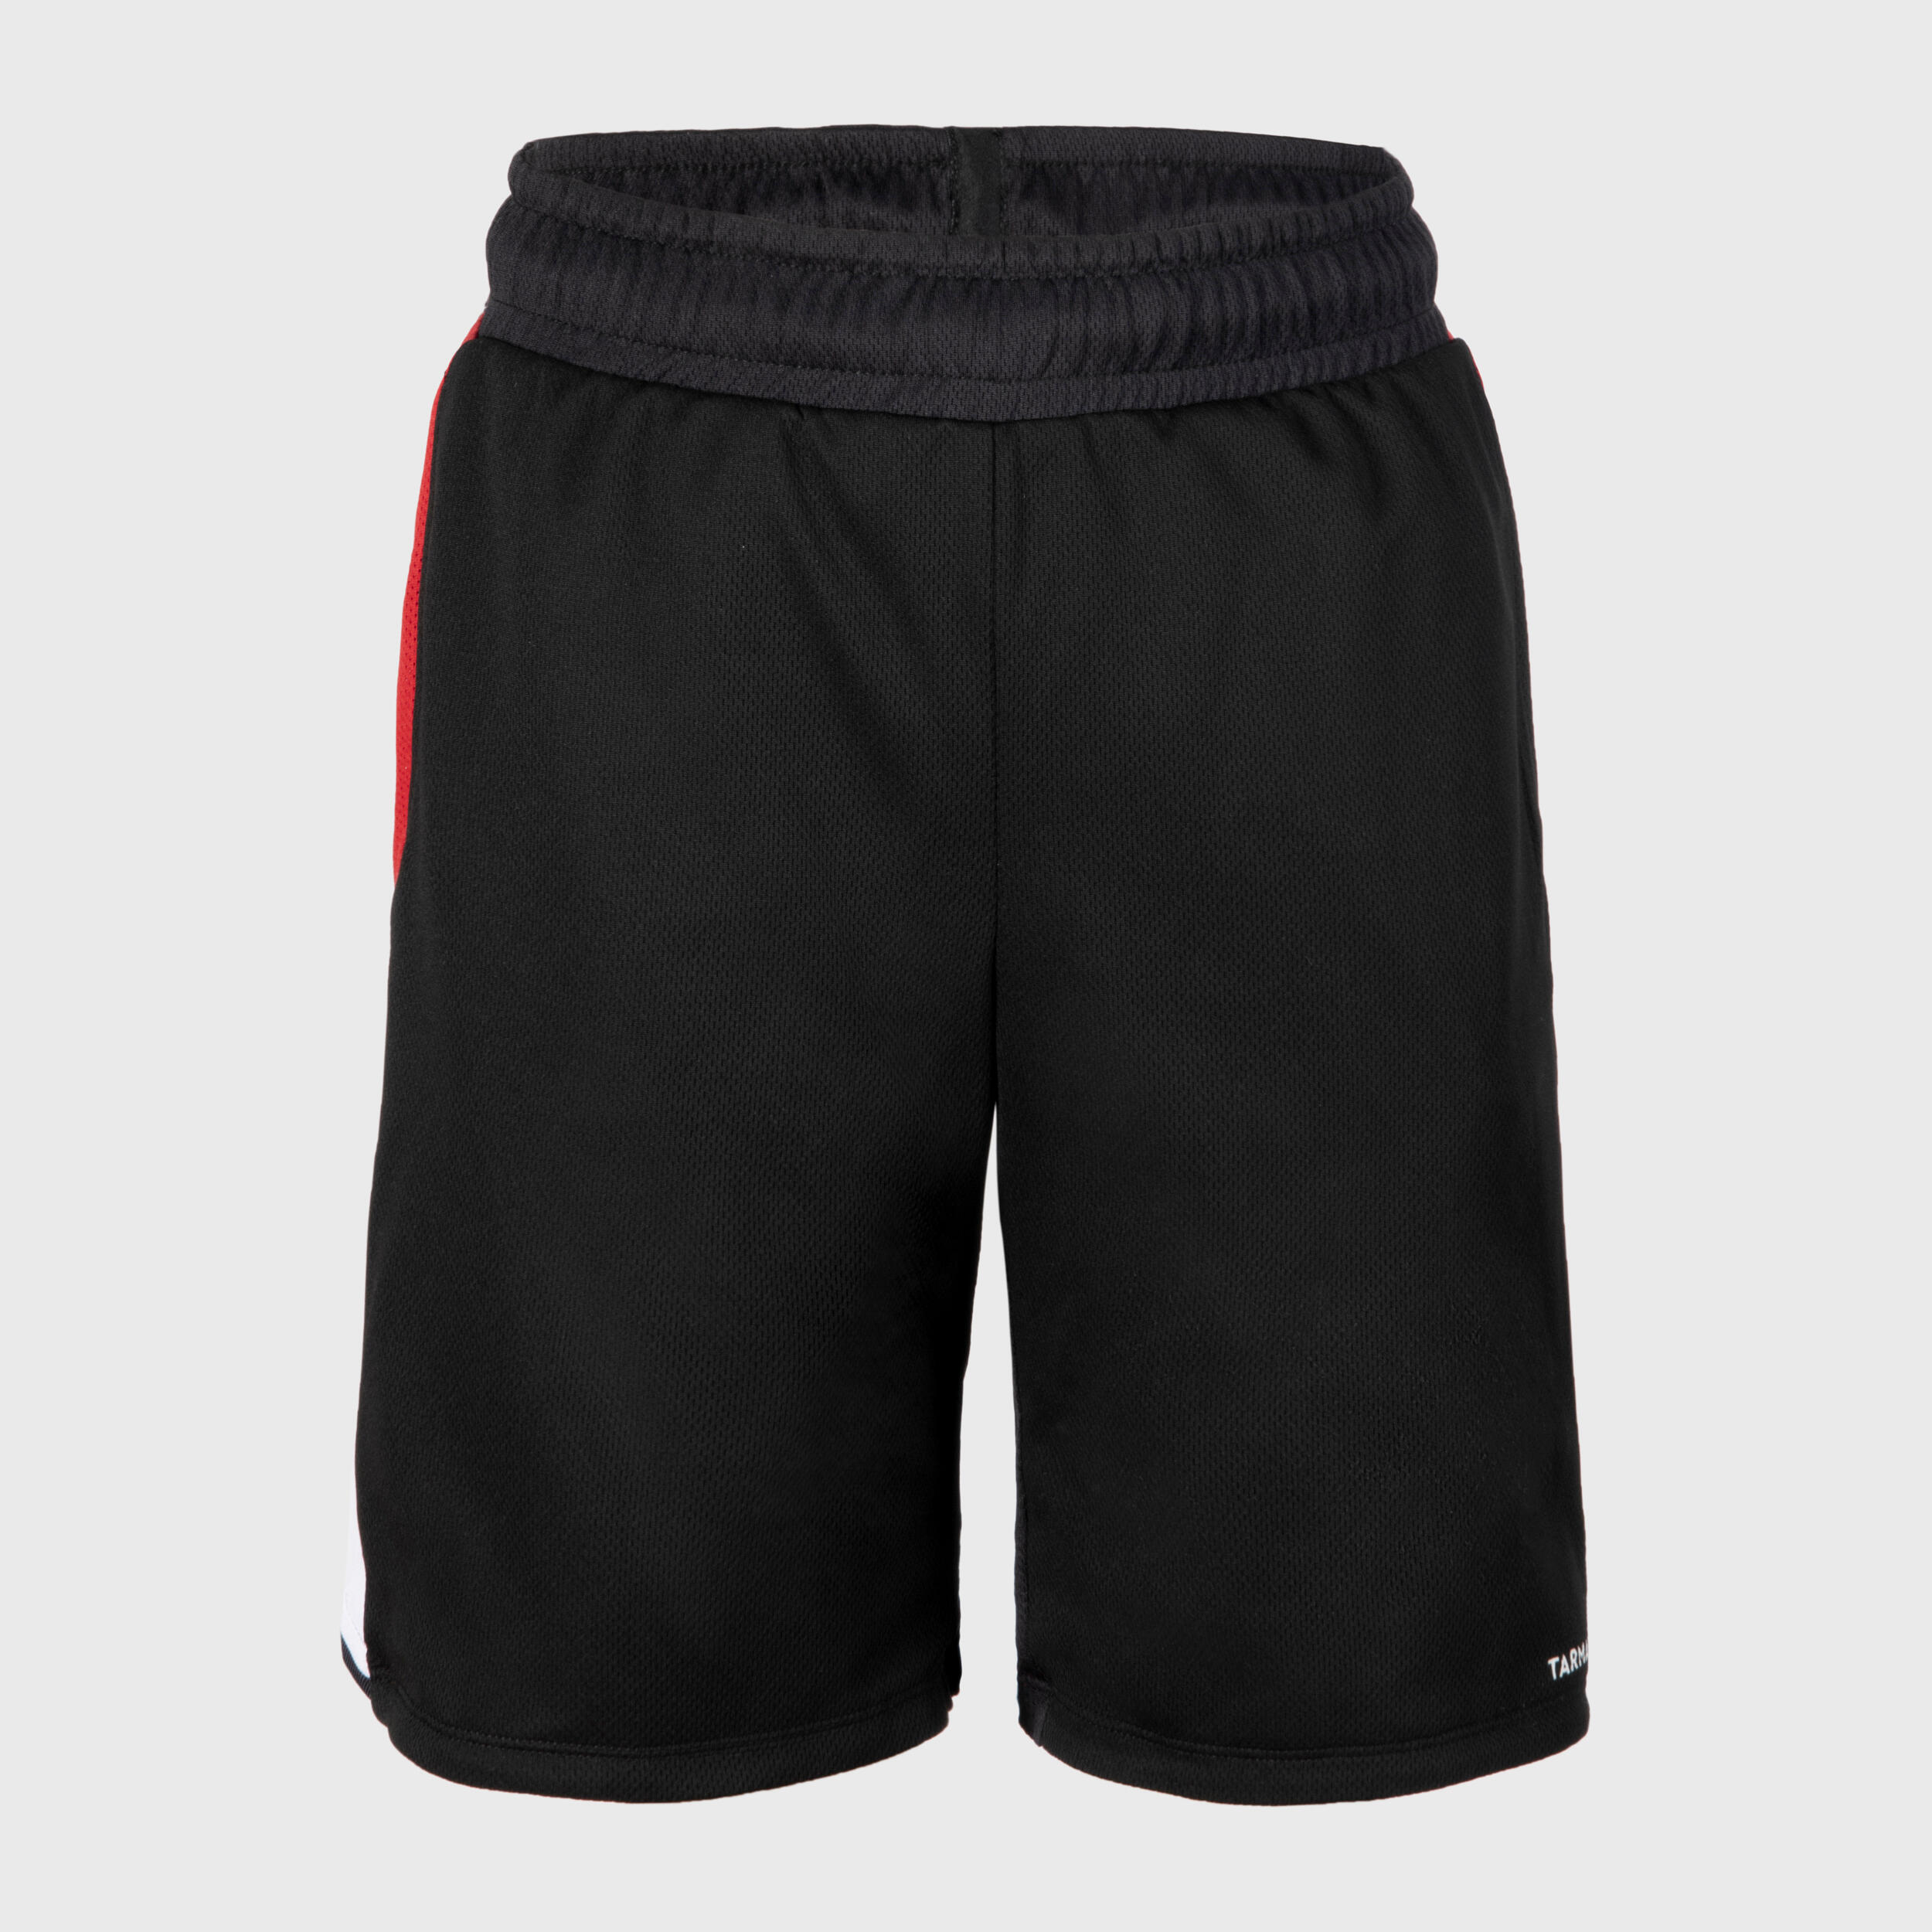 Kids' Reversible Basketball Shorts SH500R - Black/Red 9/11